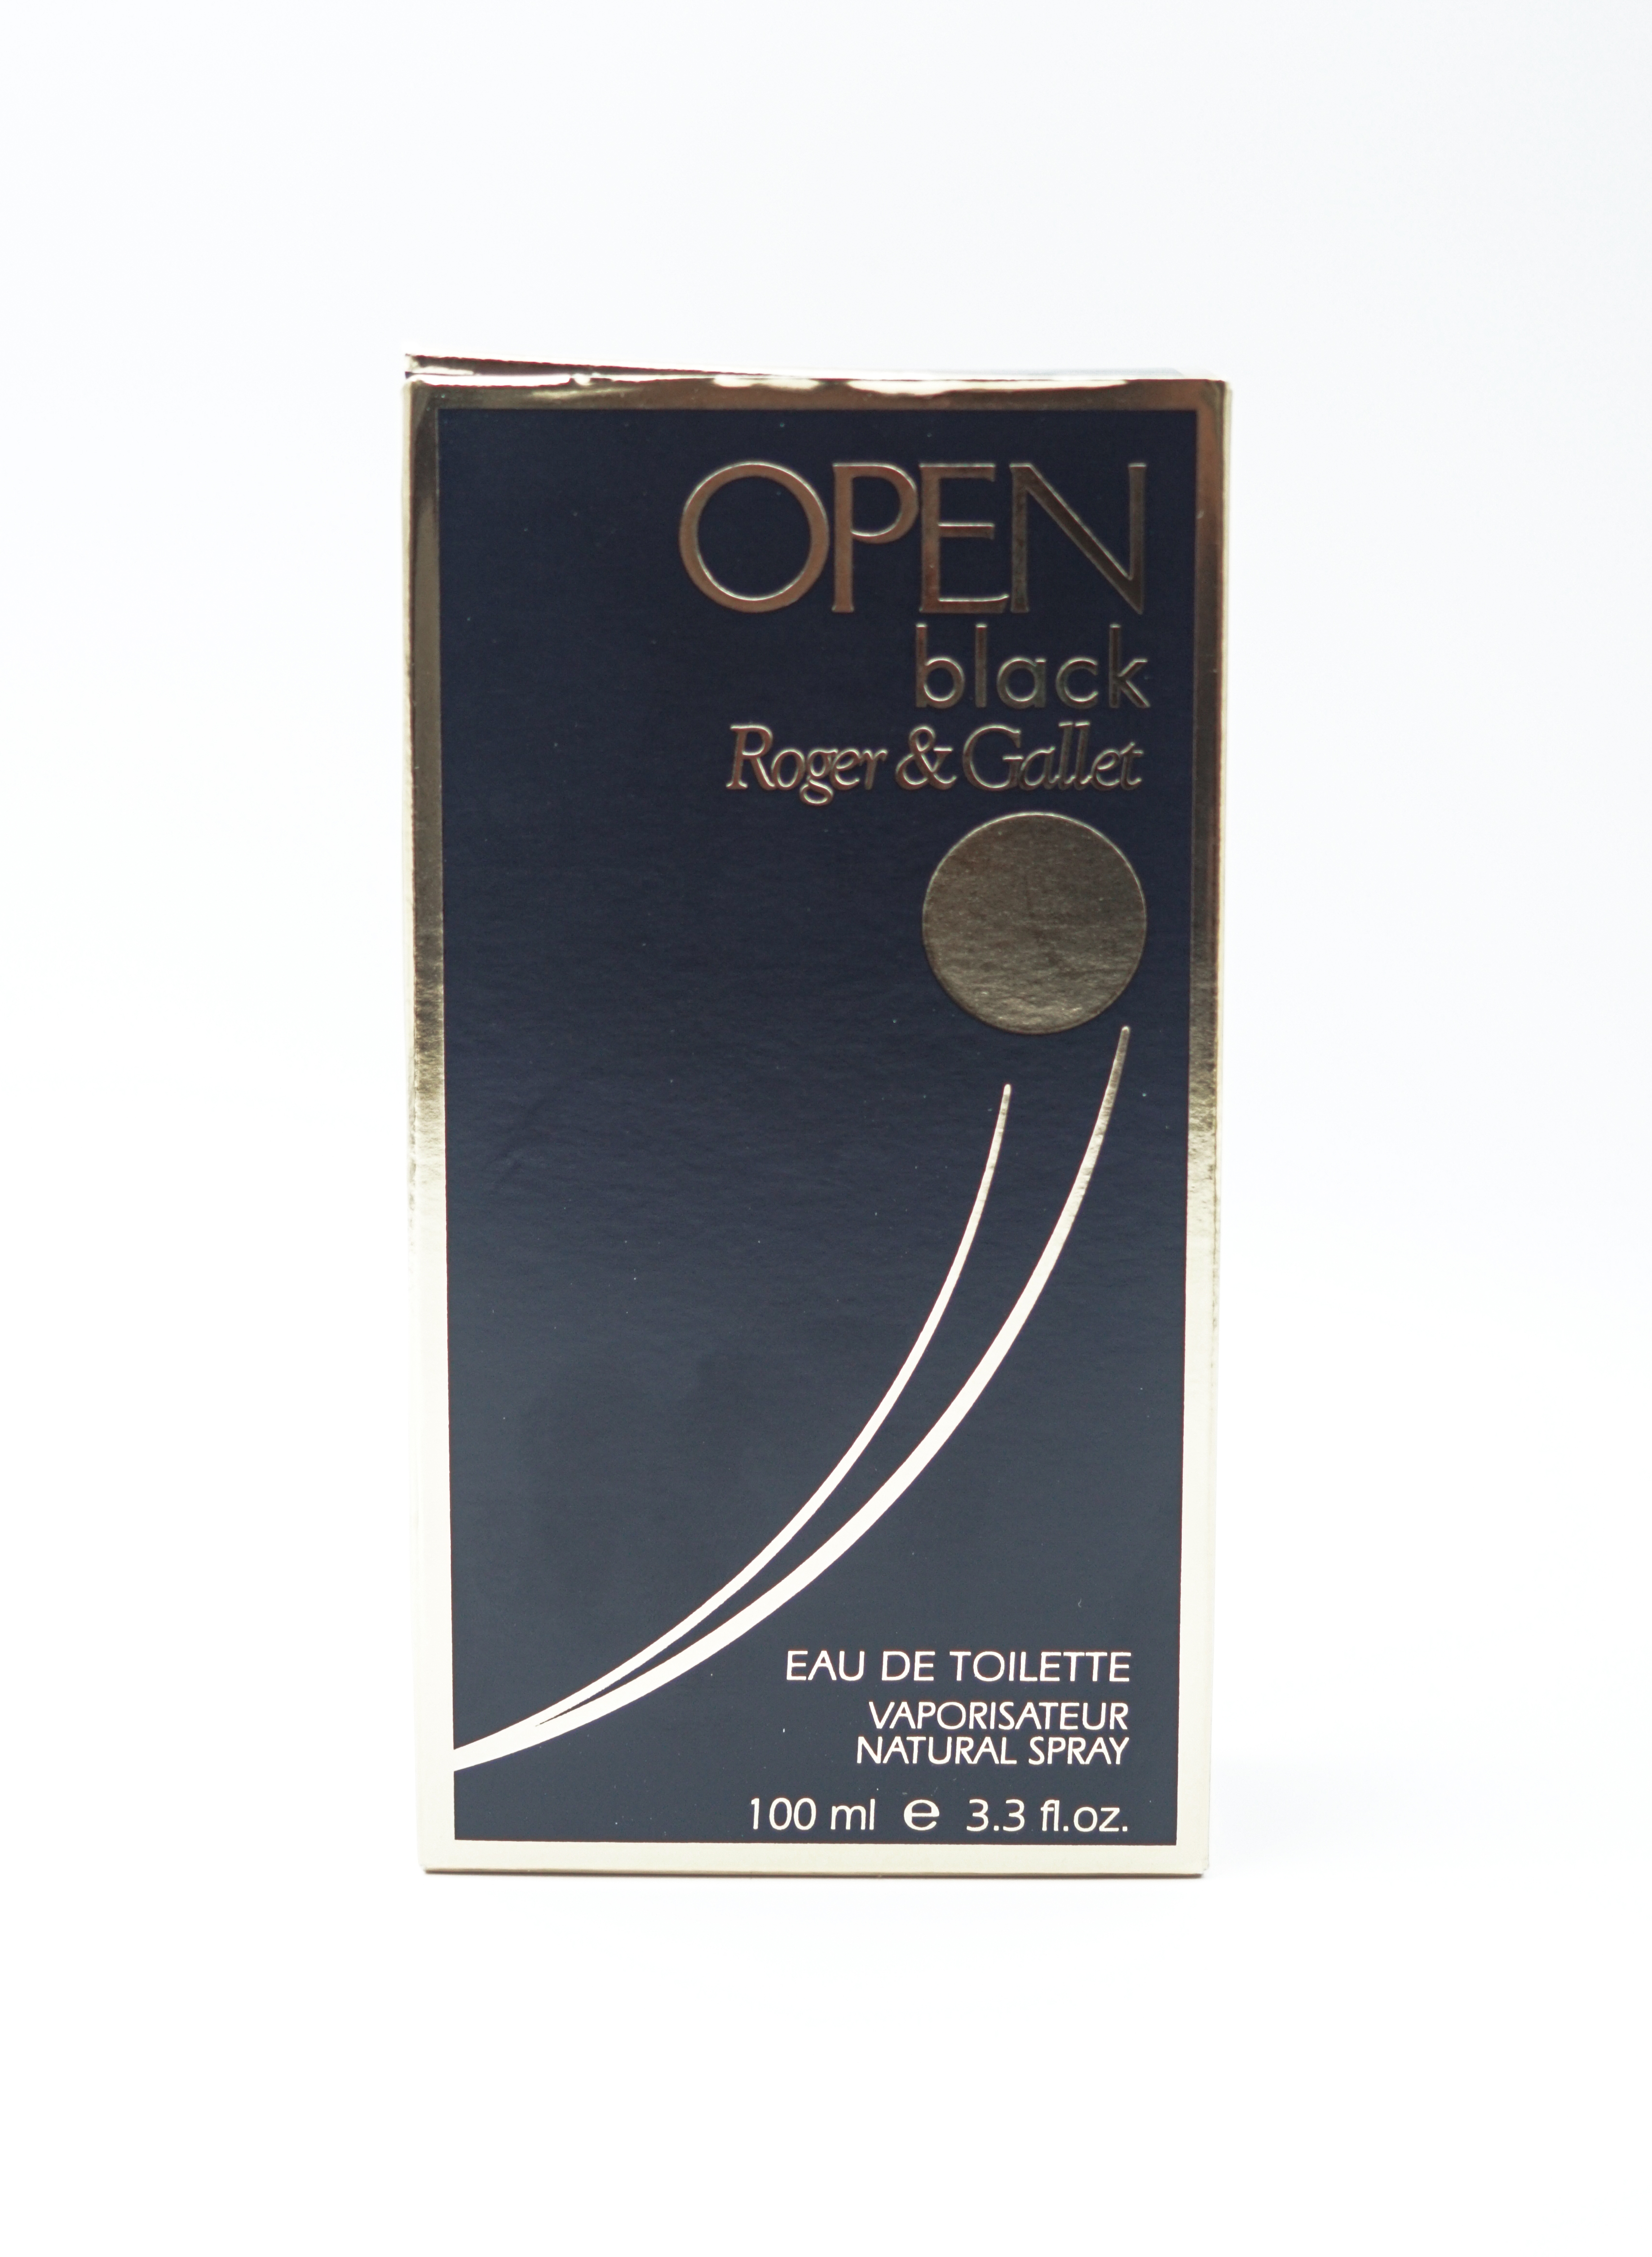 Open Black Roger And Gallet 100 ml Eau De Toilette Vaporisateur Natural Spray Perfume For Men SKU 96843